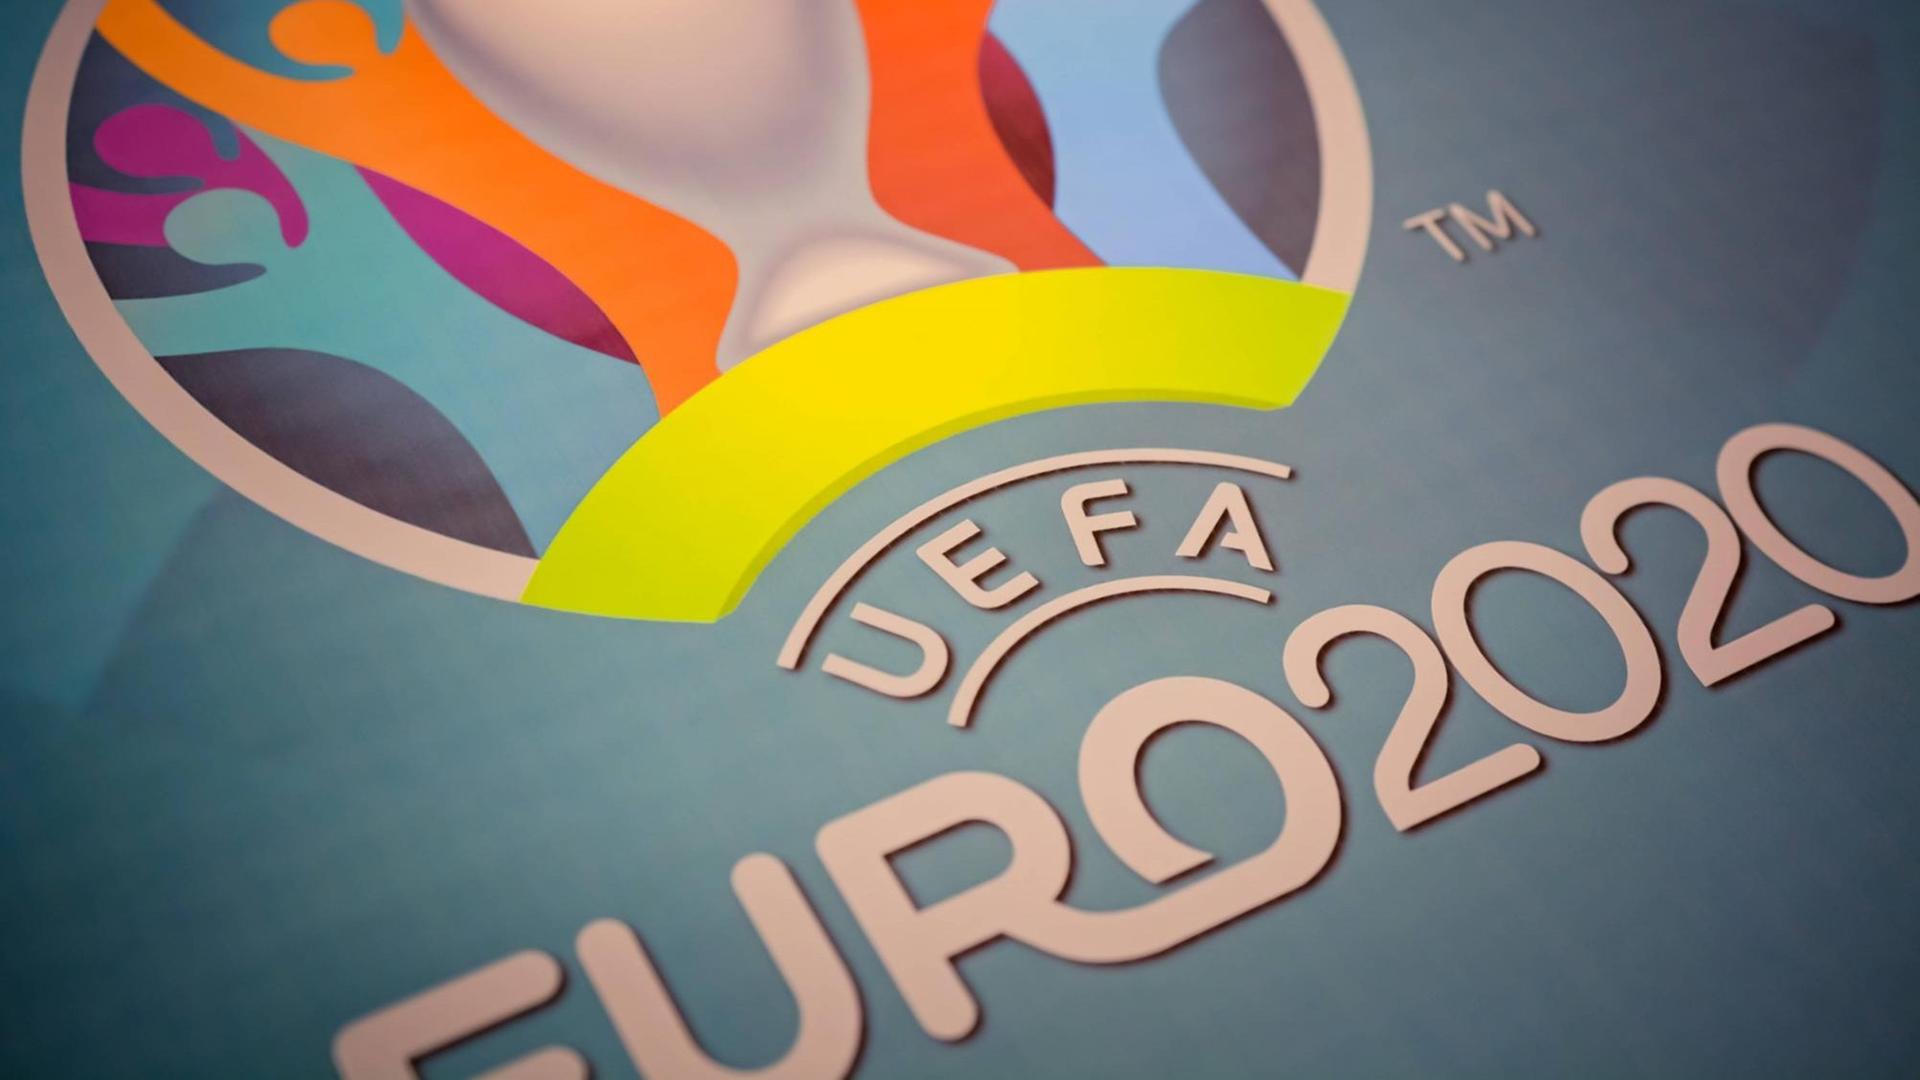 Das offizielle Logo der Fußball-EM 2020